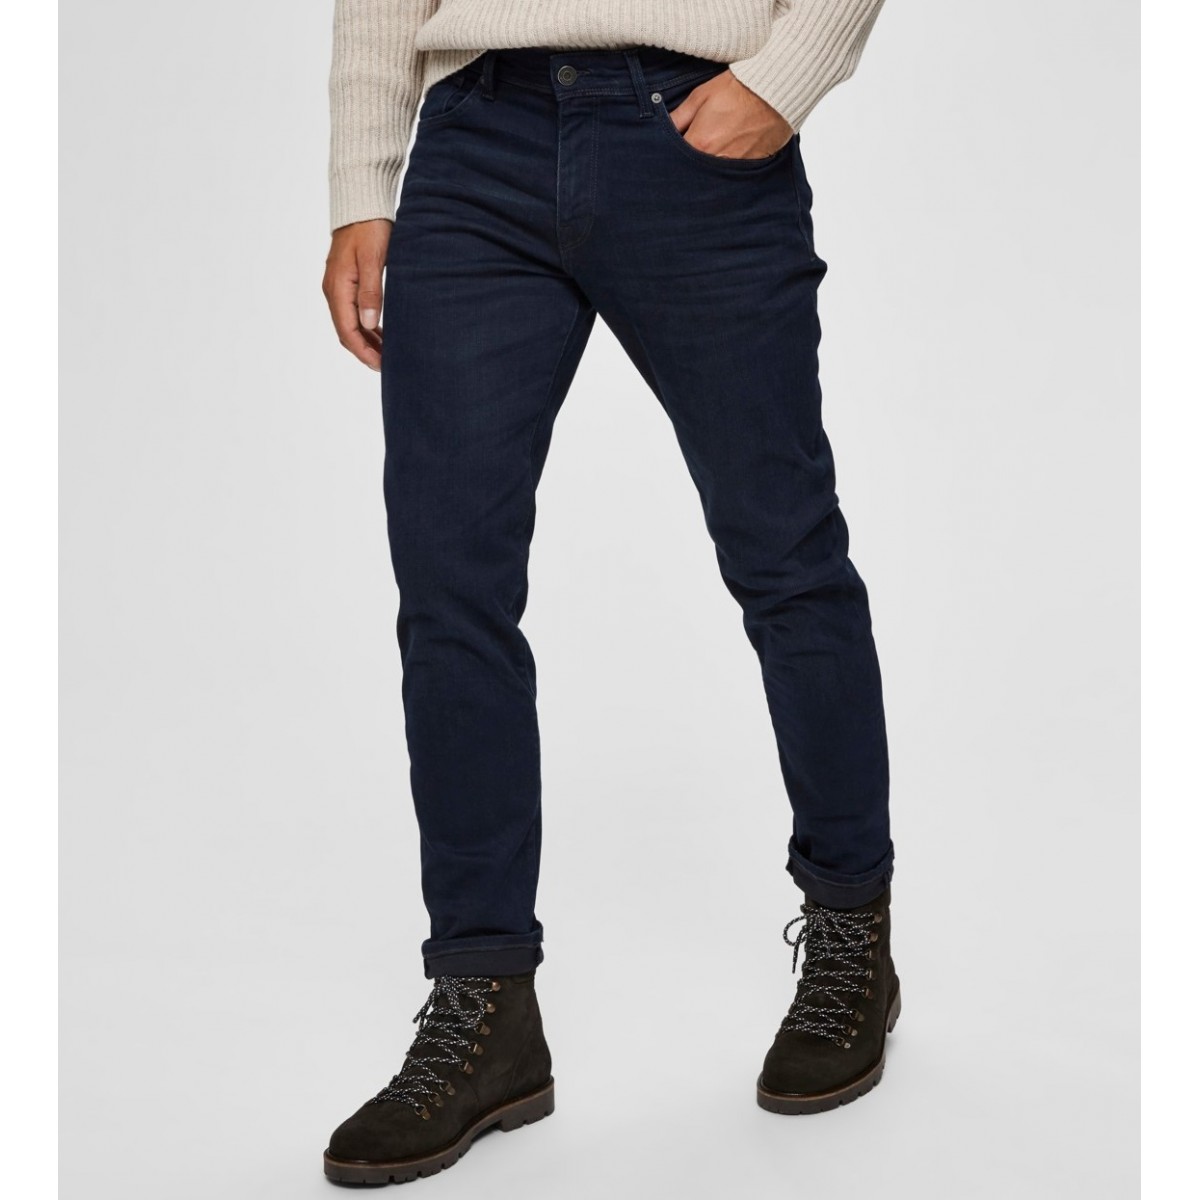 Selected homme - Jeans regular bleu foncé